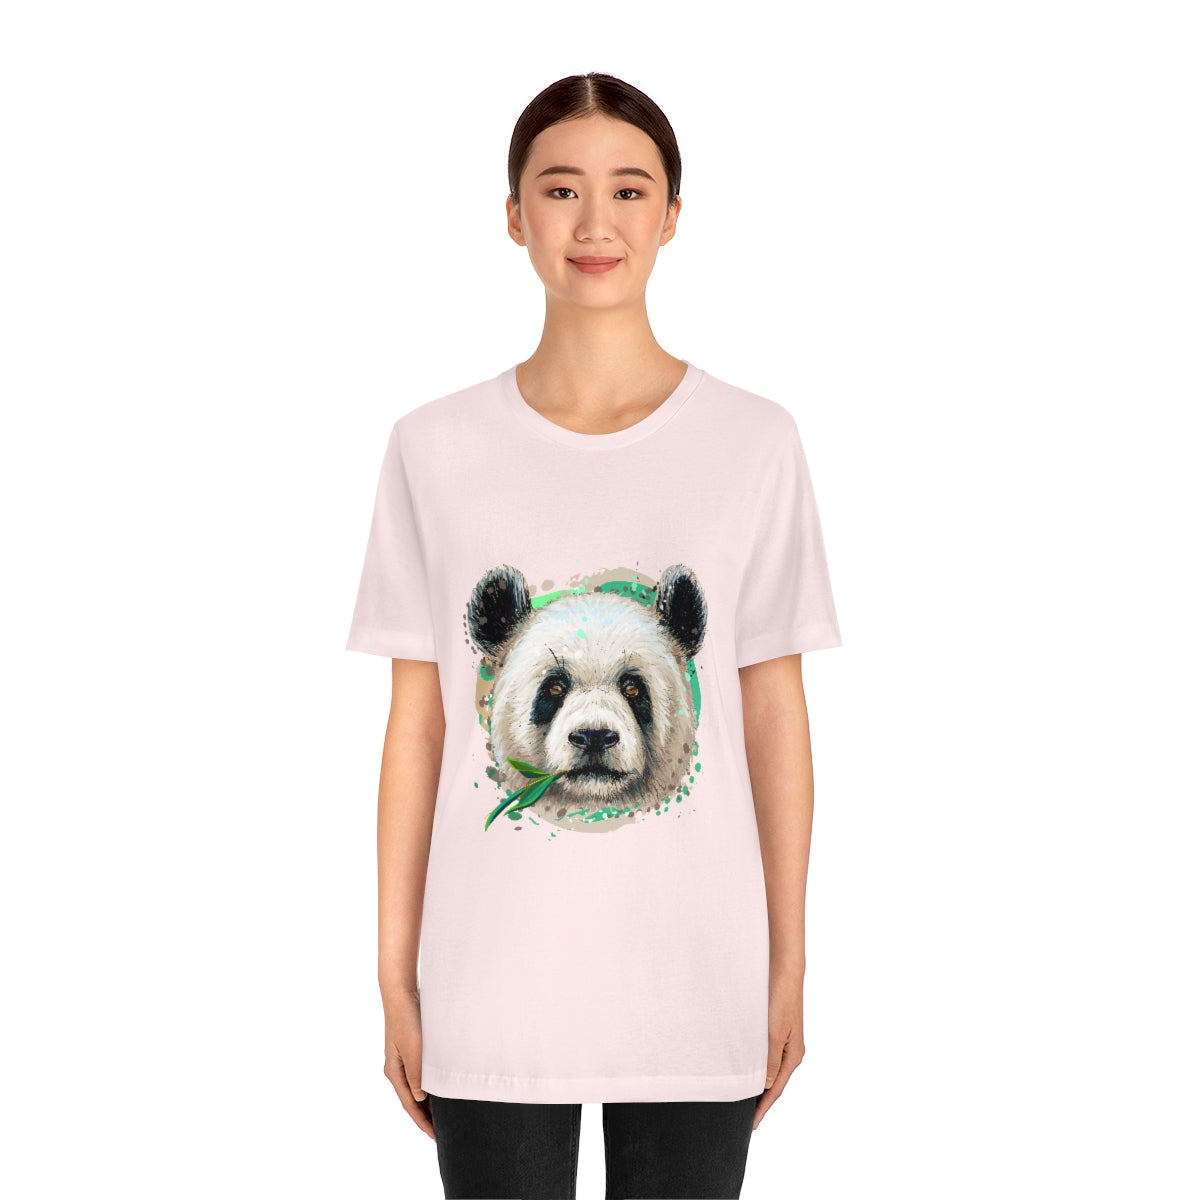 Unisex Jersey Short Sleeve Tee "Colorful panda"